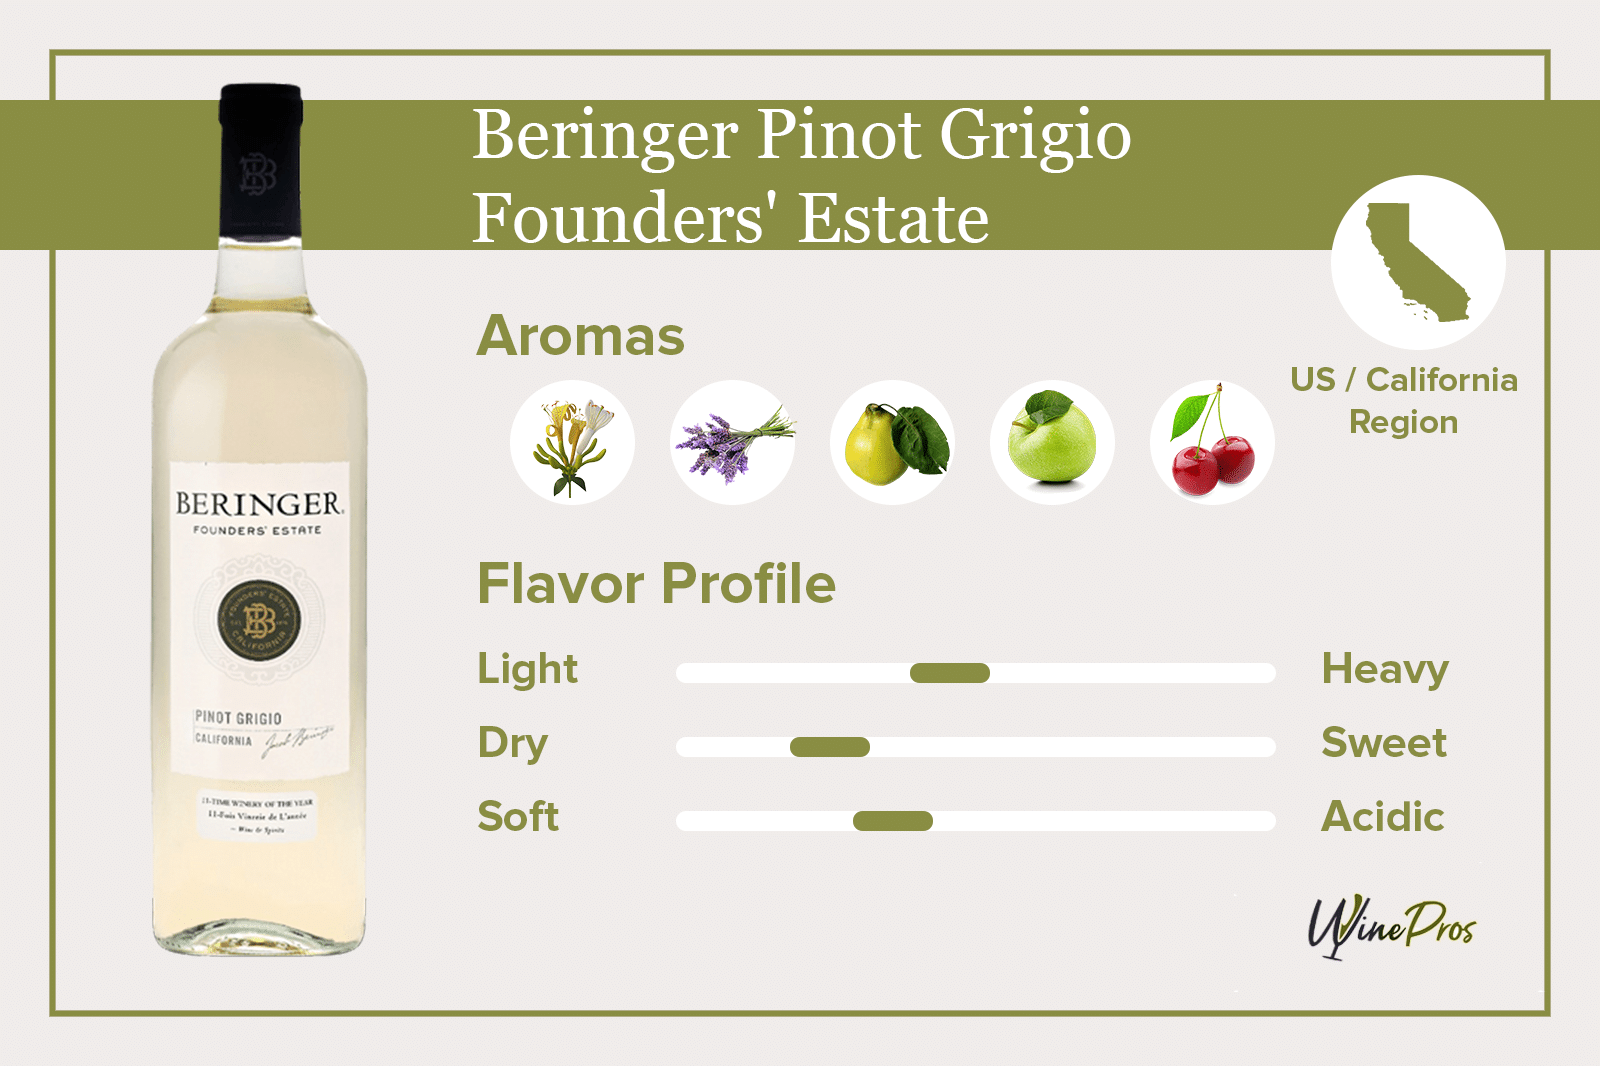 Beringer Pinot Grigio Review (2021) – Founders’ Estate